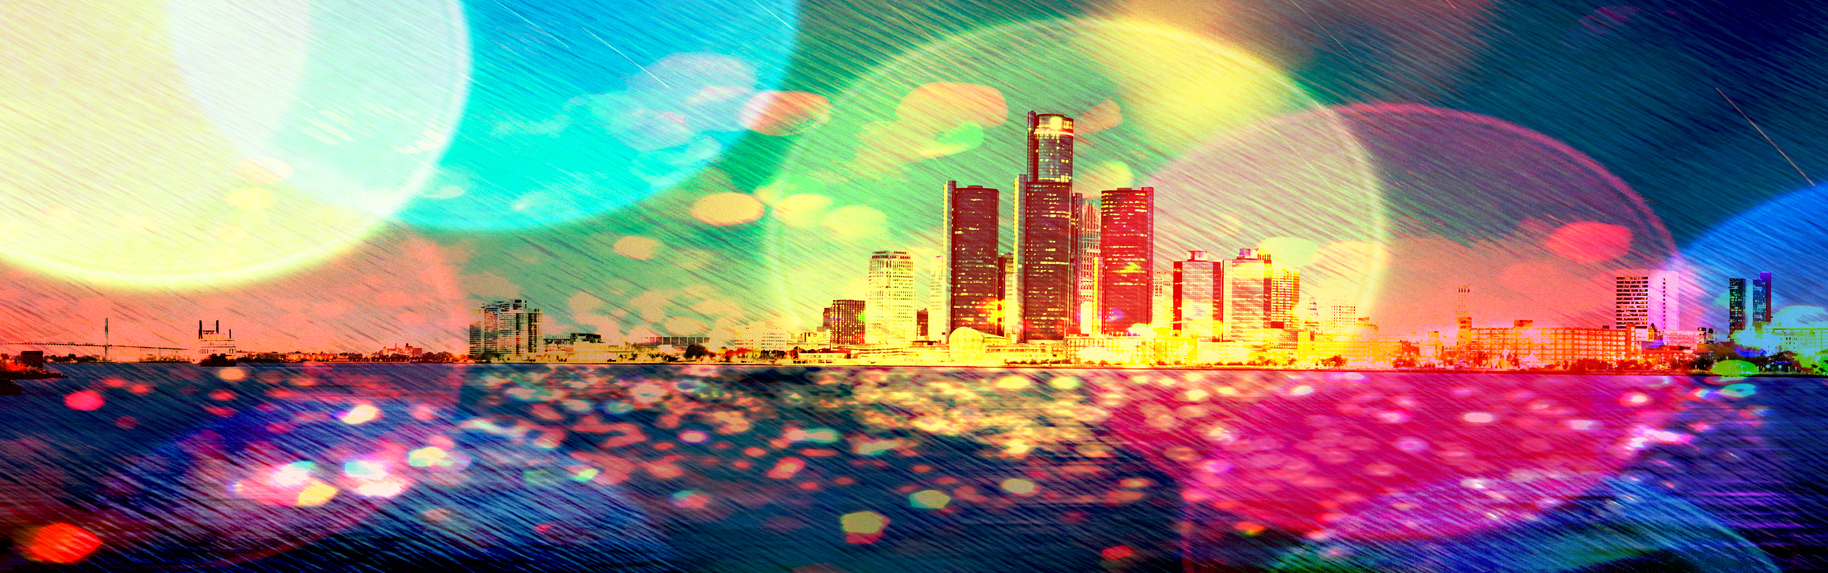 Detroit skyline tech image